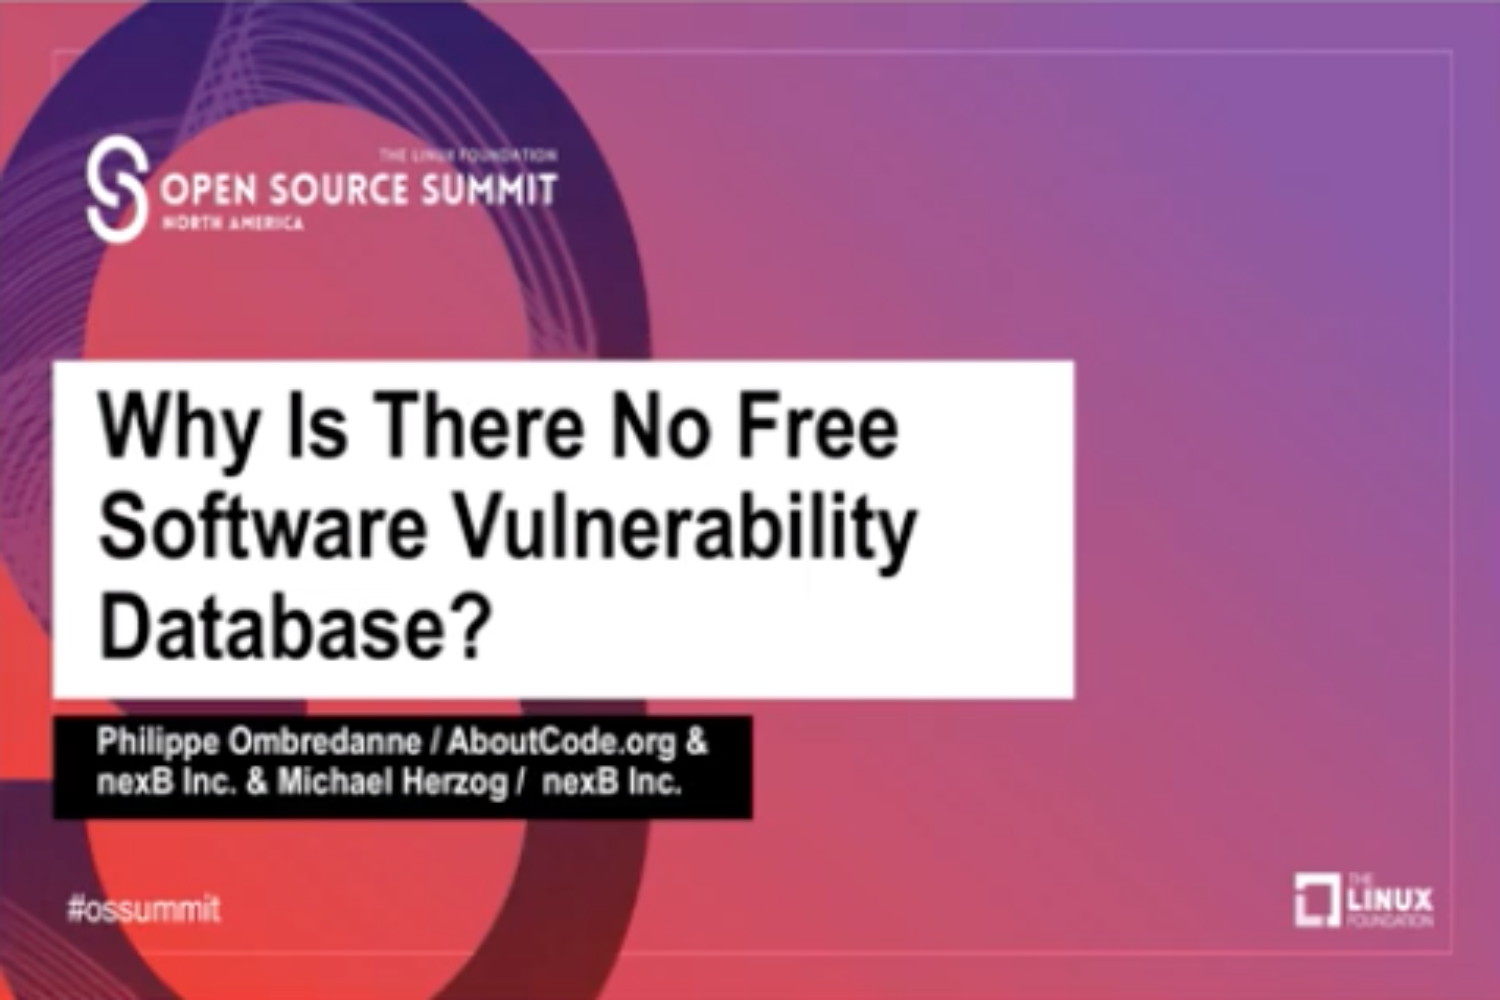 Free software vulnerability database